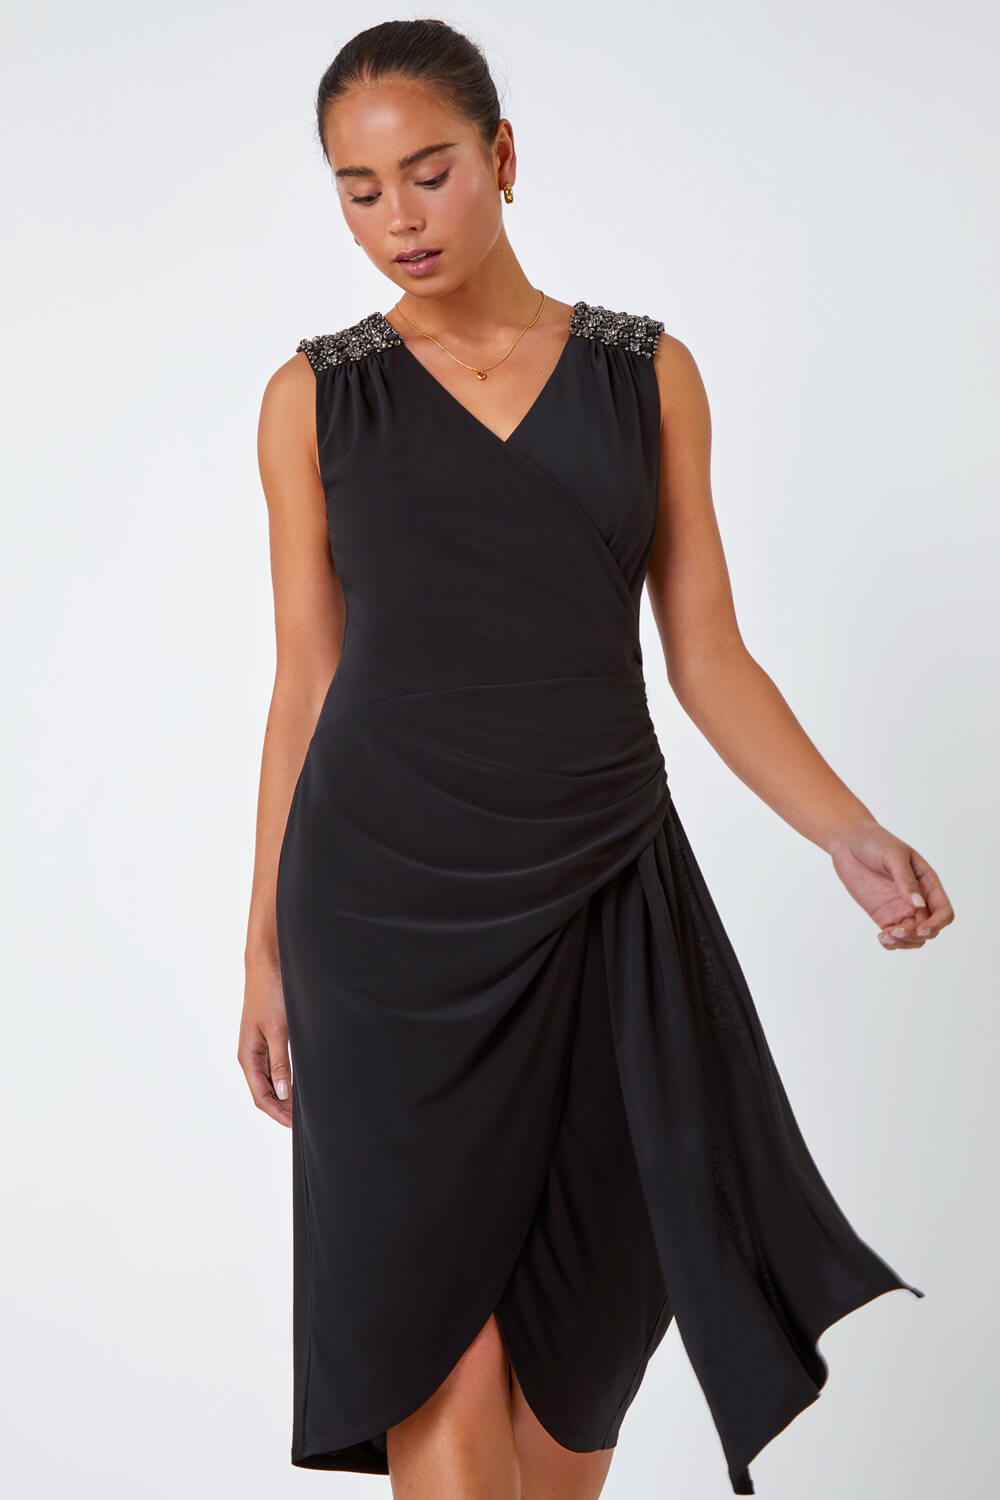 Black Petite Embellished Ruched Stretch Dress, Image 2 of 5